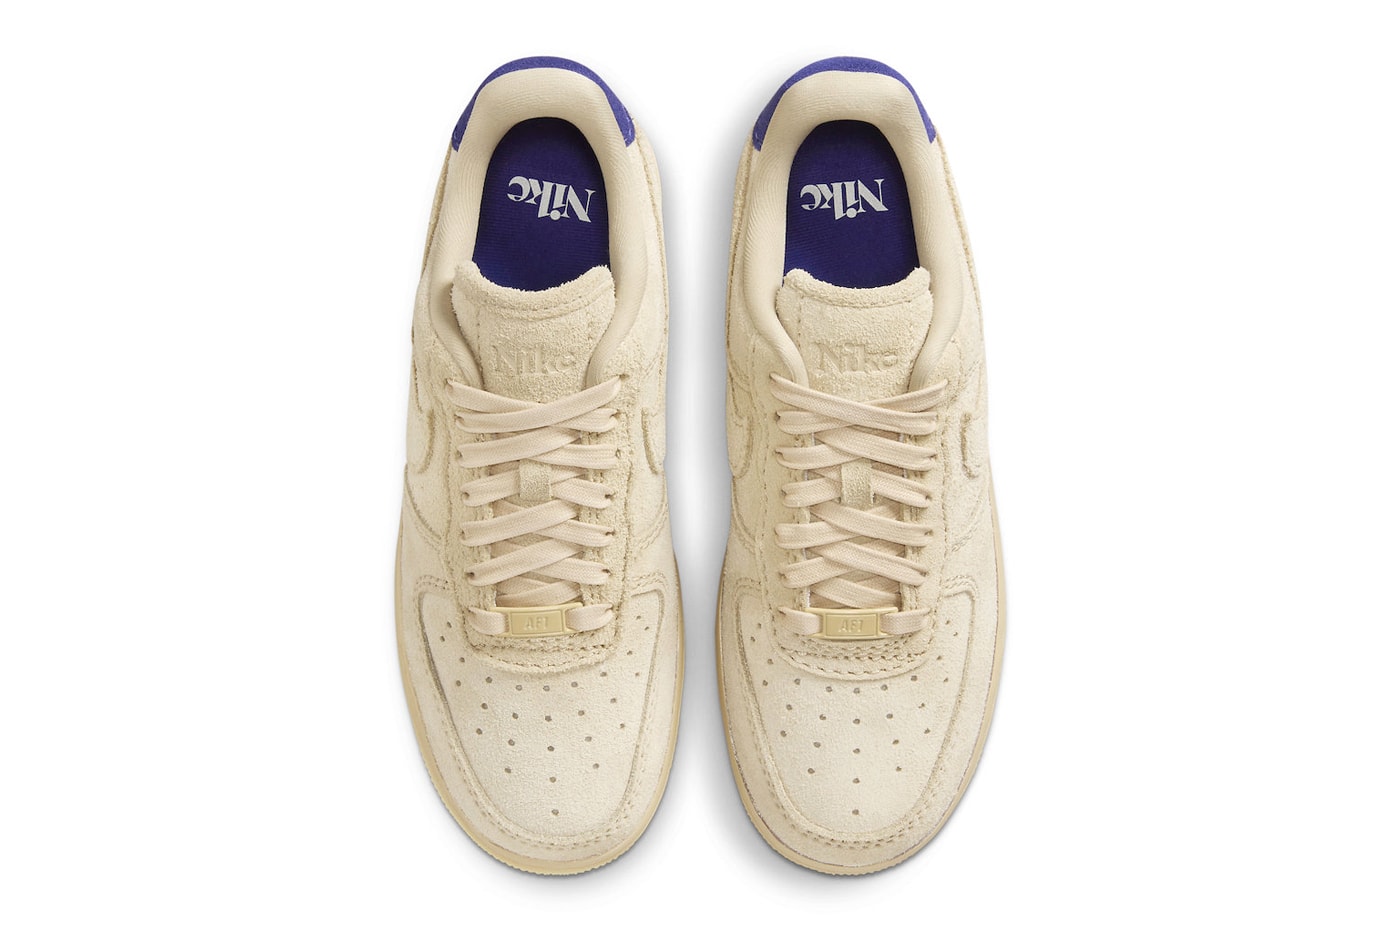 Nike Air Force 1 Low Surfaces in "Grain" FN7202-224 Grain/Grain-Deep Royal Blue-Polar classic white shoes summer 2023 low tops nike swoosh